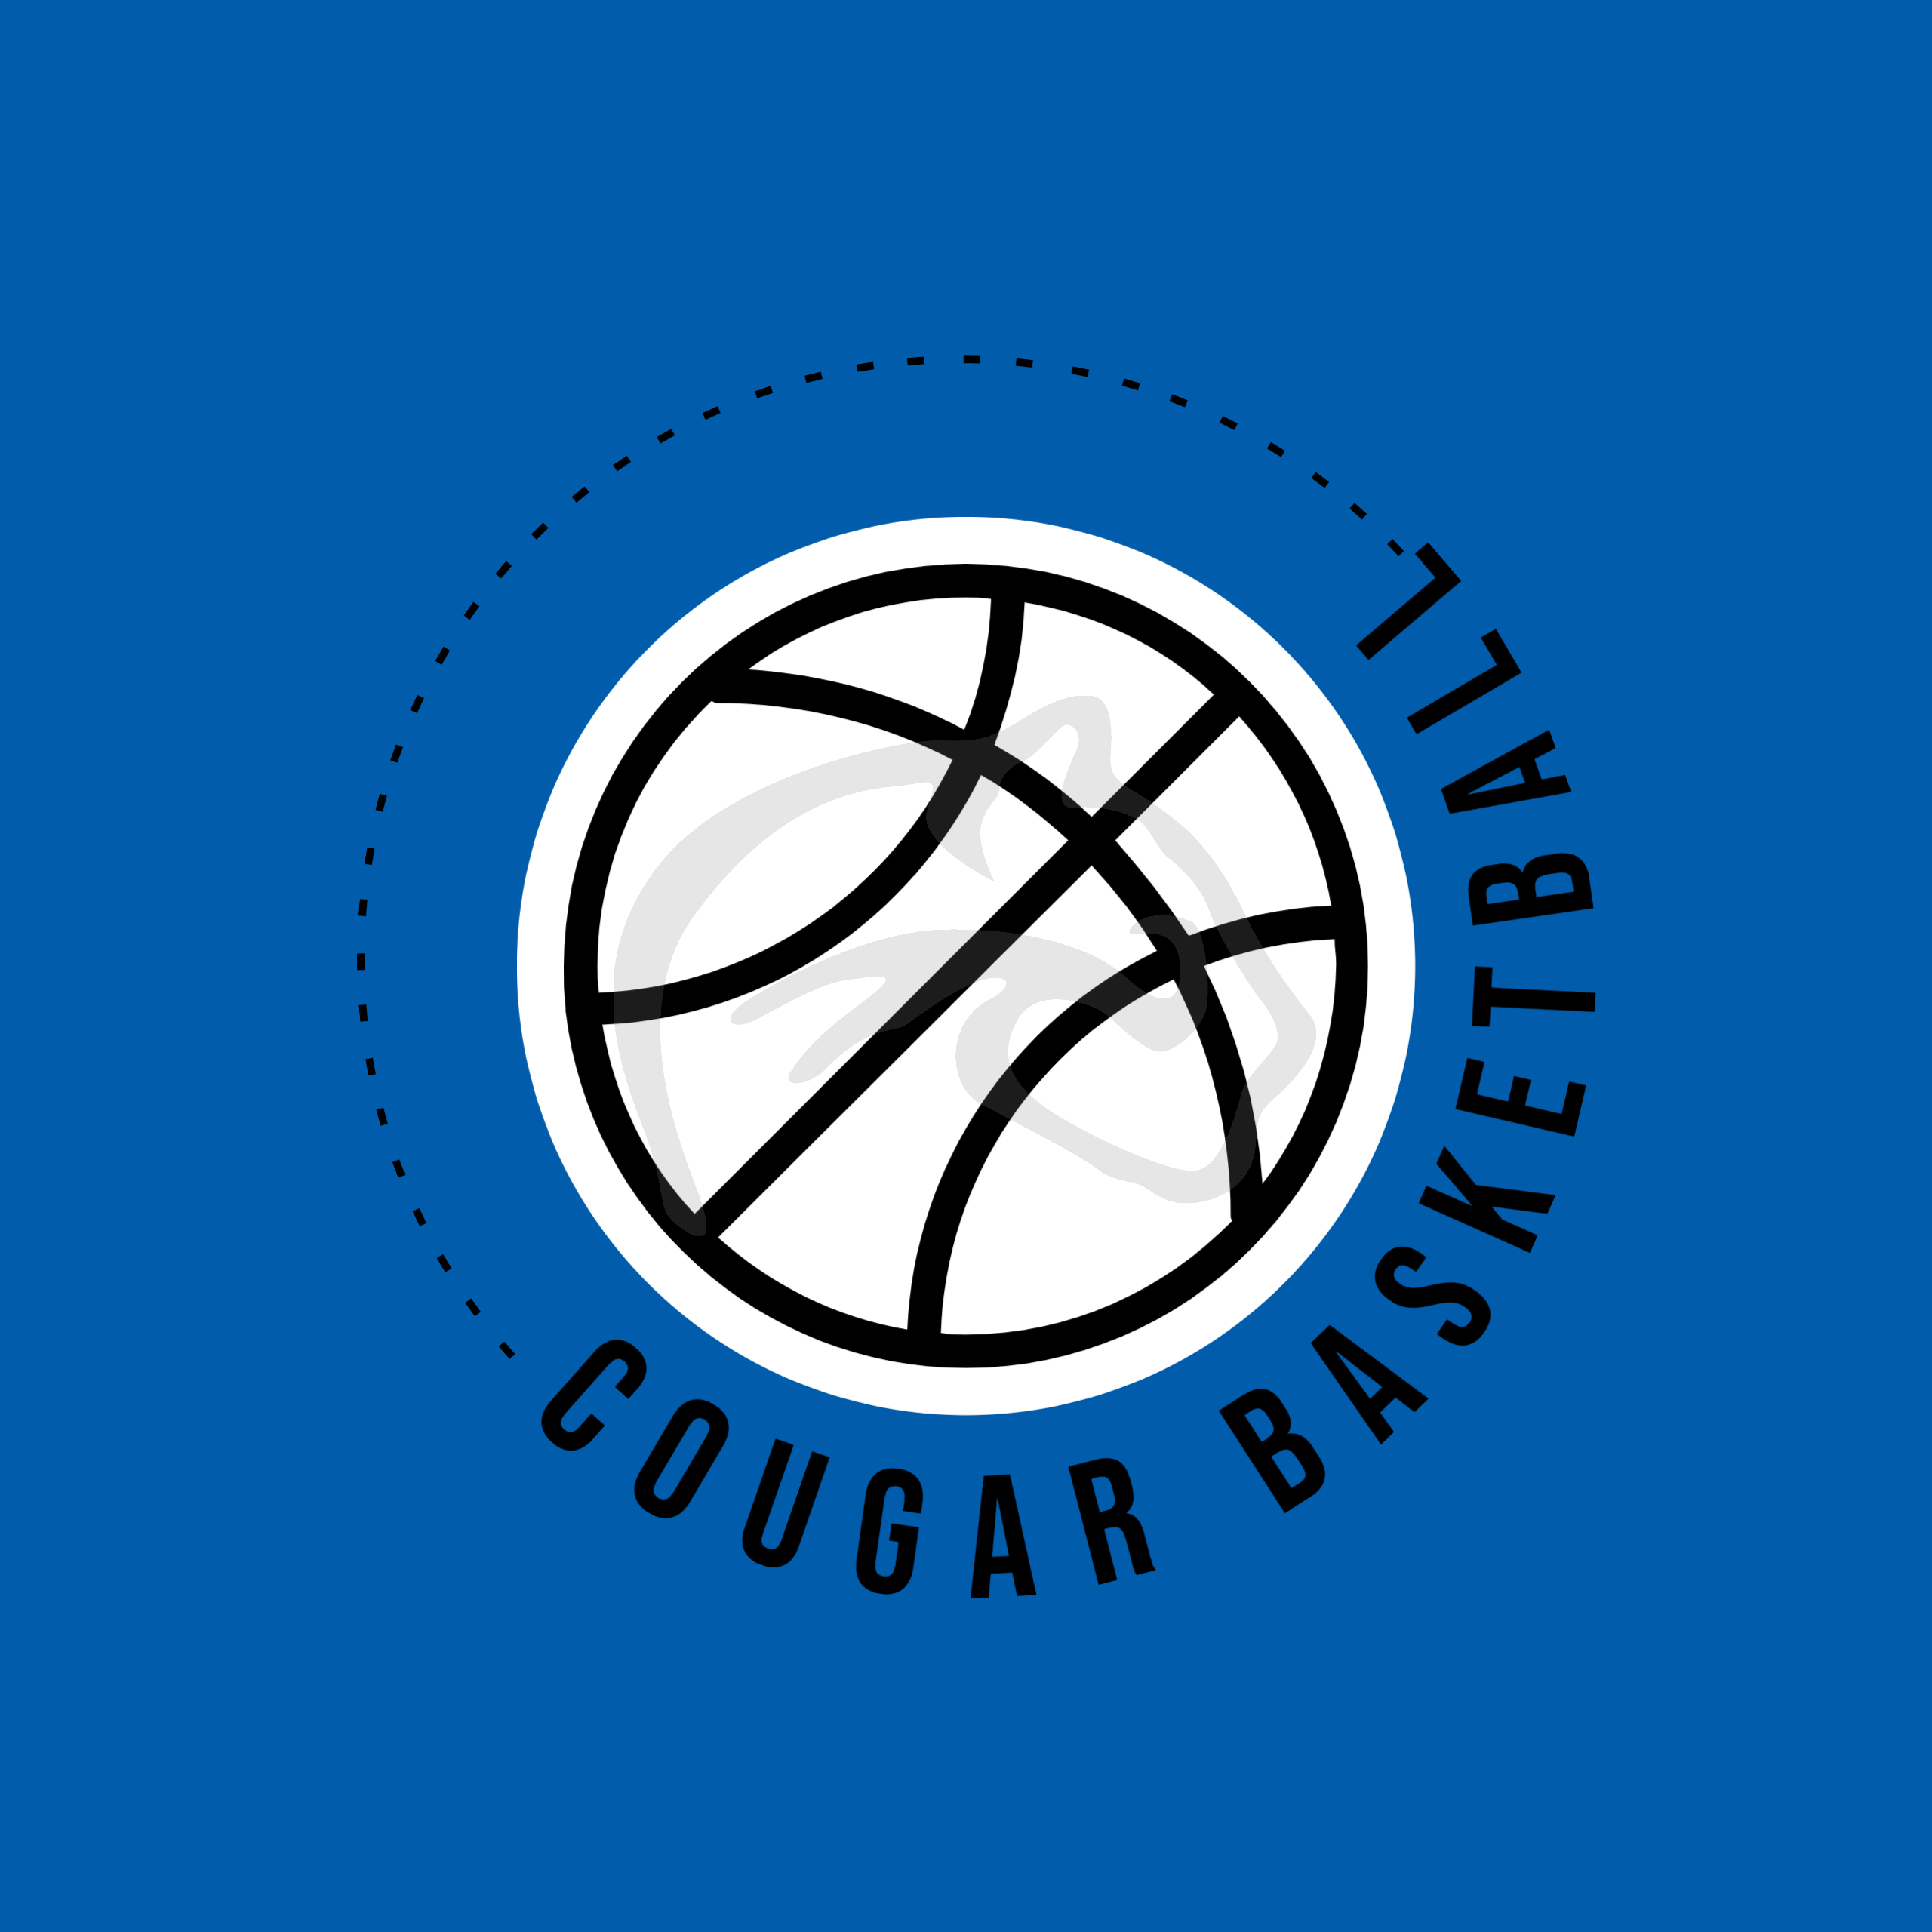 Cougar Basketball